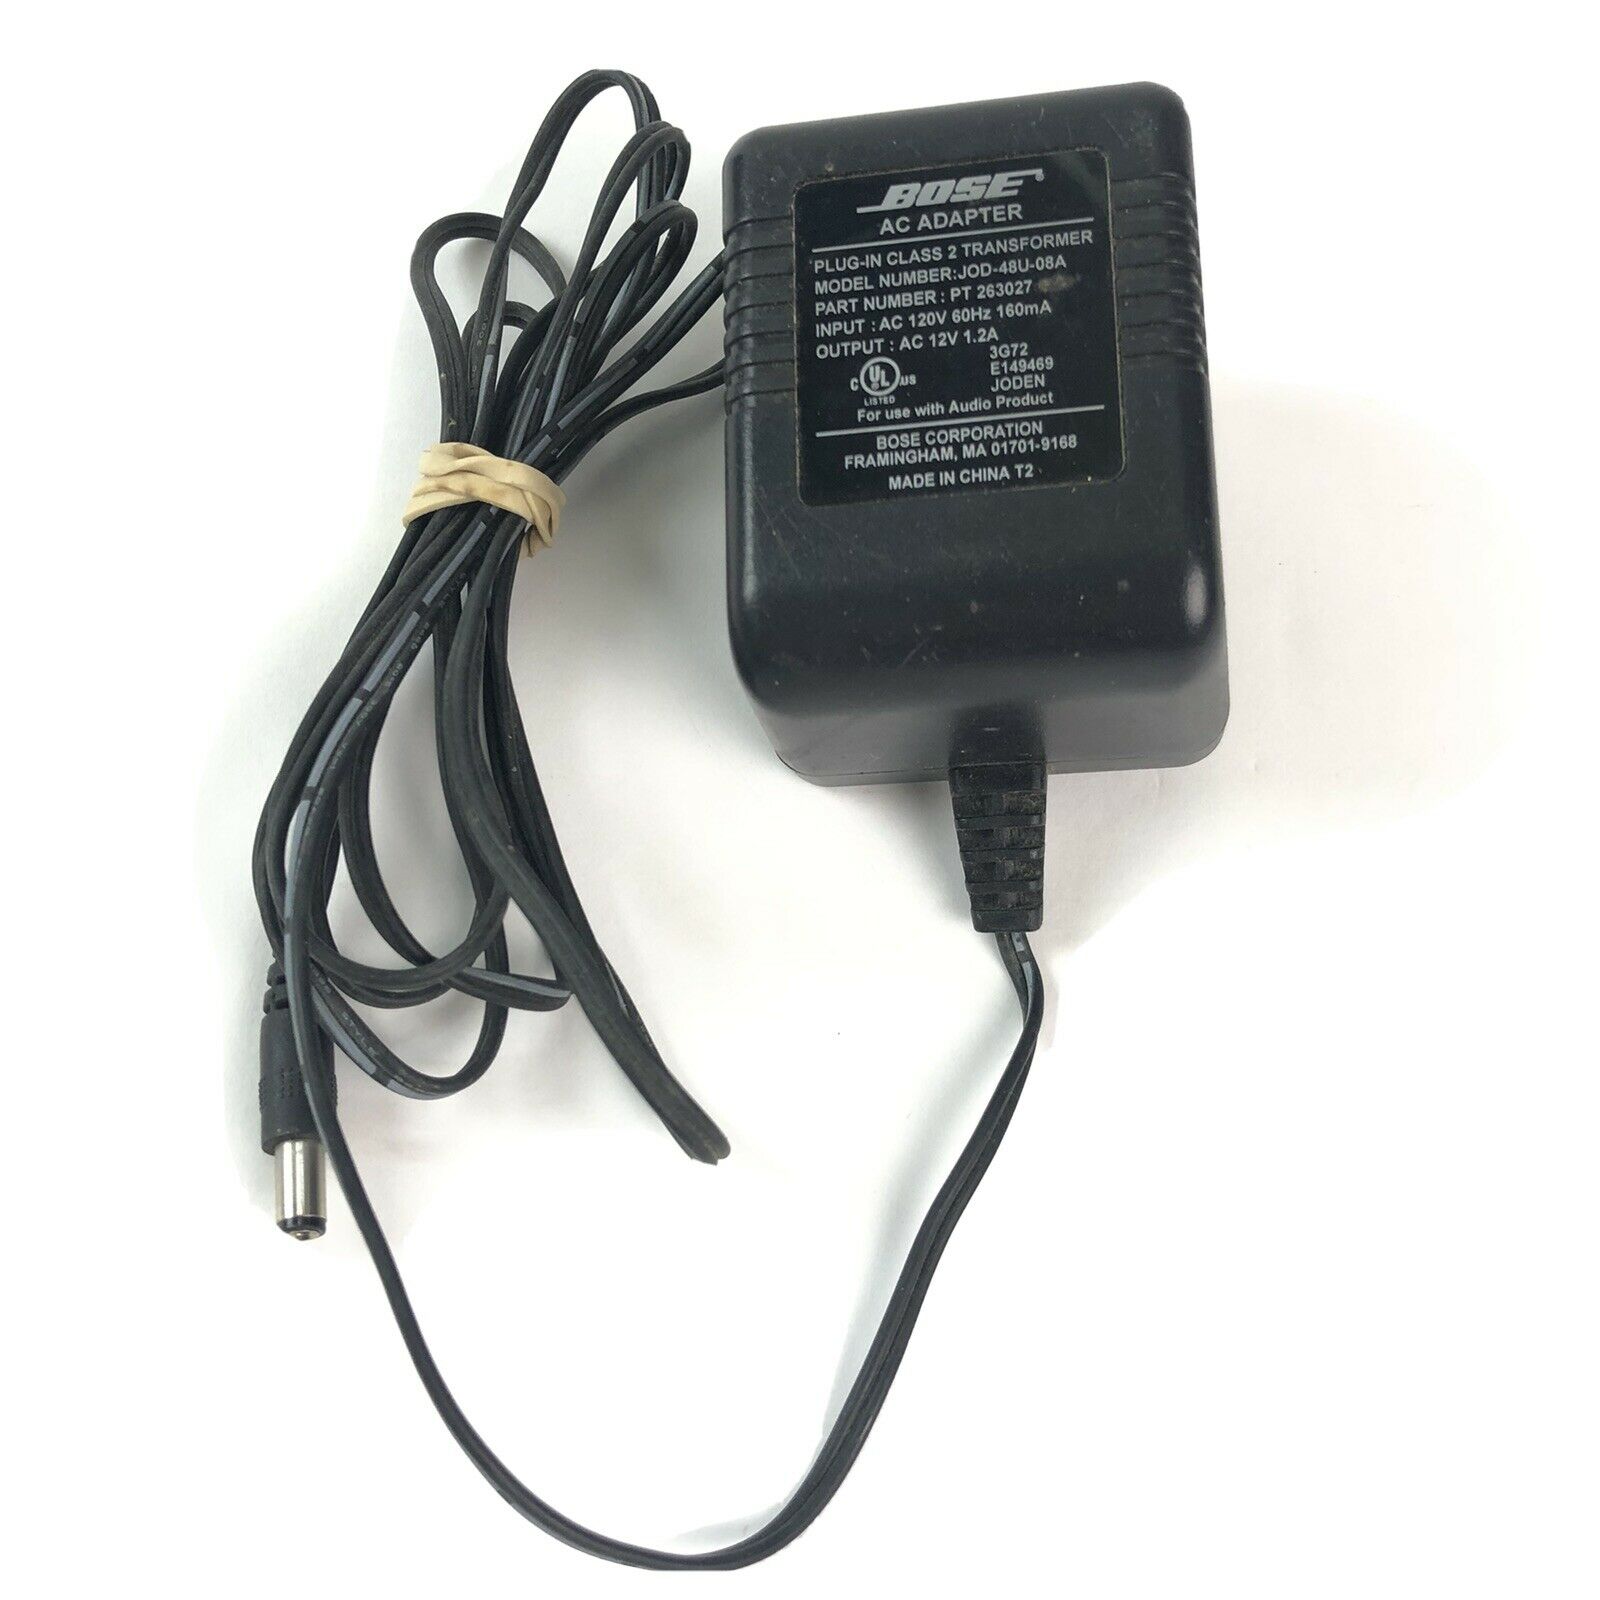 BOSE AC Adapter JOD-48U-08A 12V 1.2A PT 263027 Companion 2 Power Supply Connection Split/Duplication: 1:2 Type: AC/A